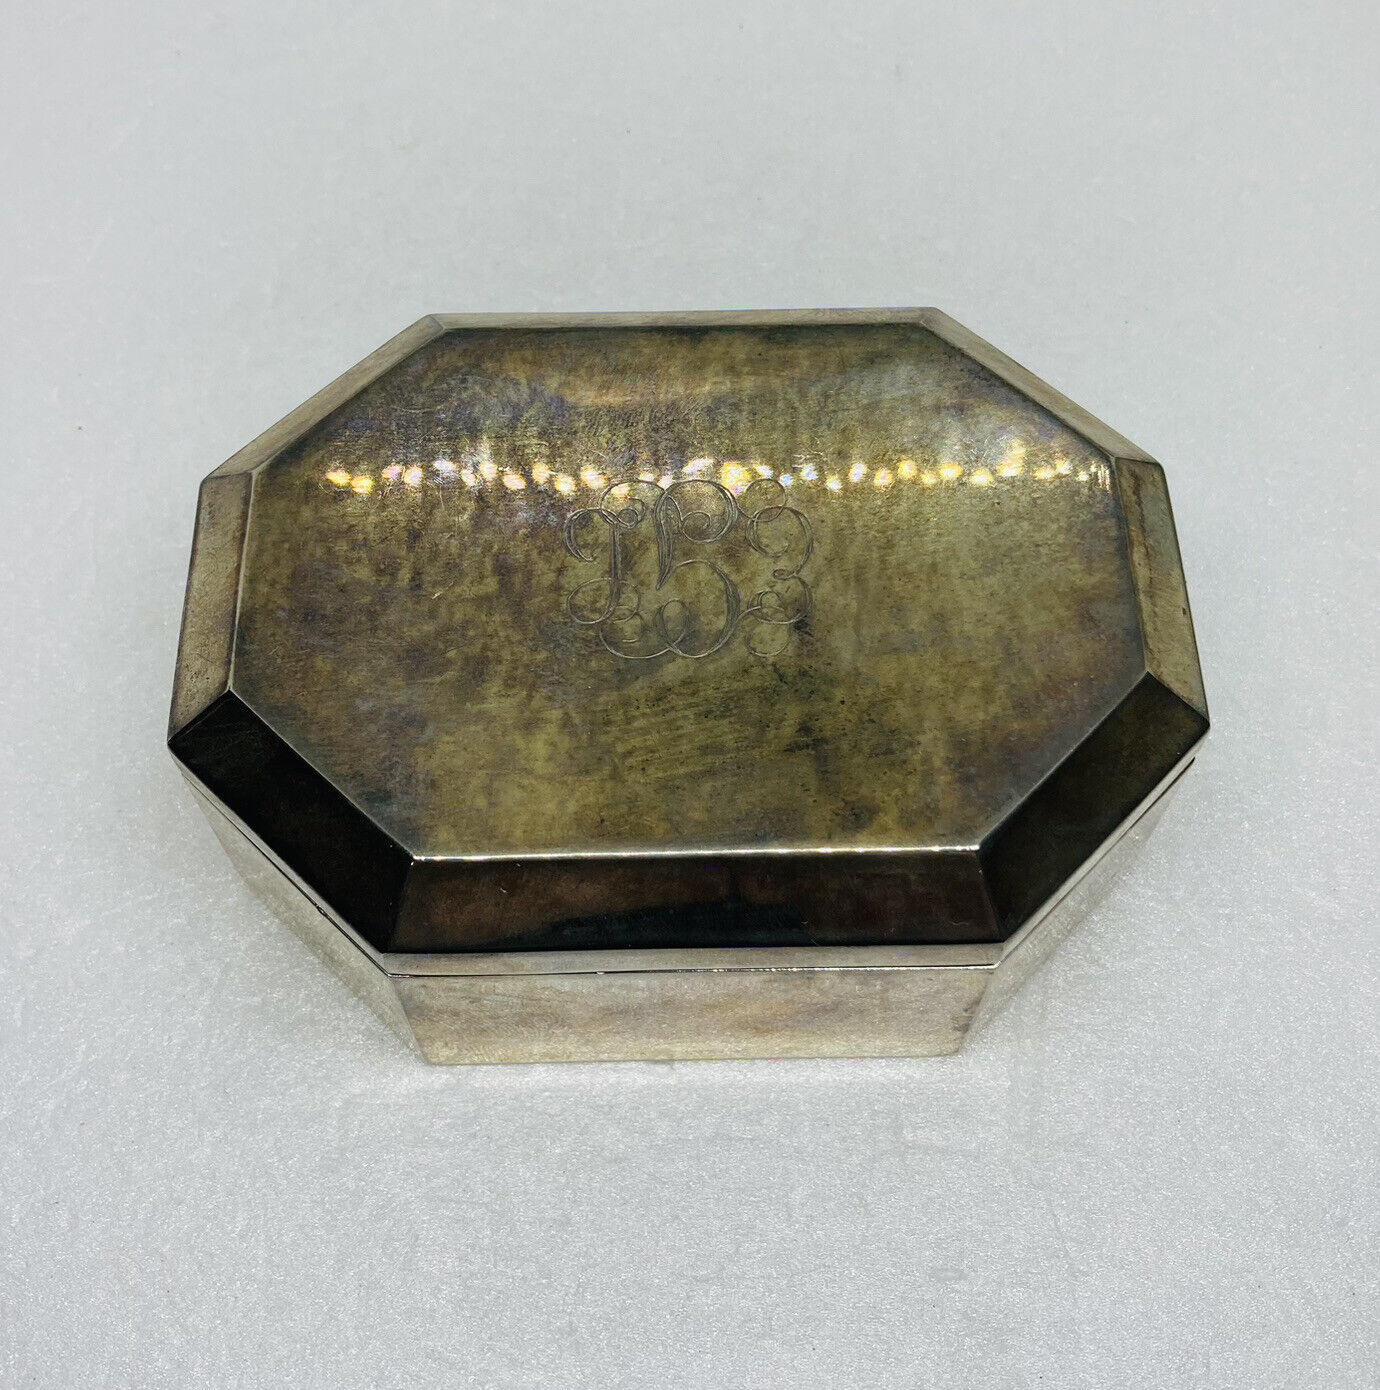 Vintage 1970s Silver Plated Jewelry Trinket Box Engraved “EGL” Art Decor X